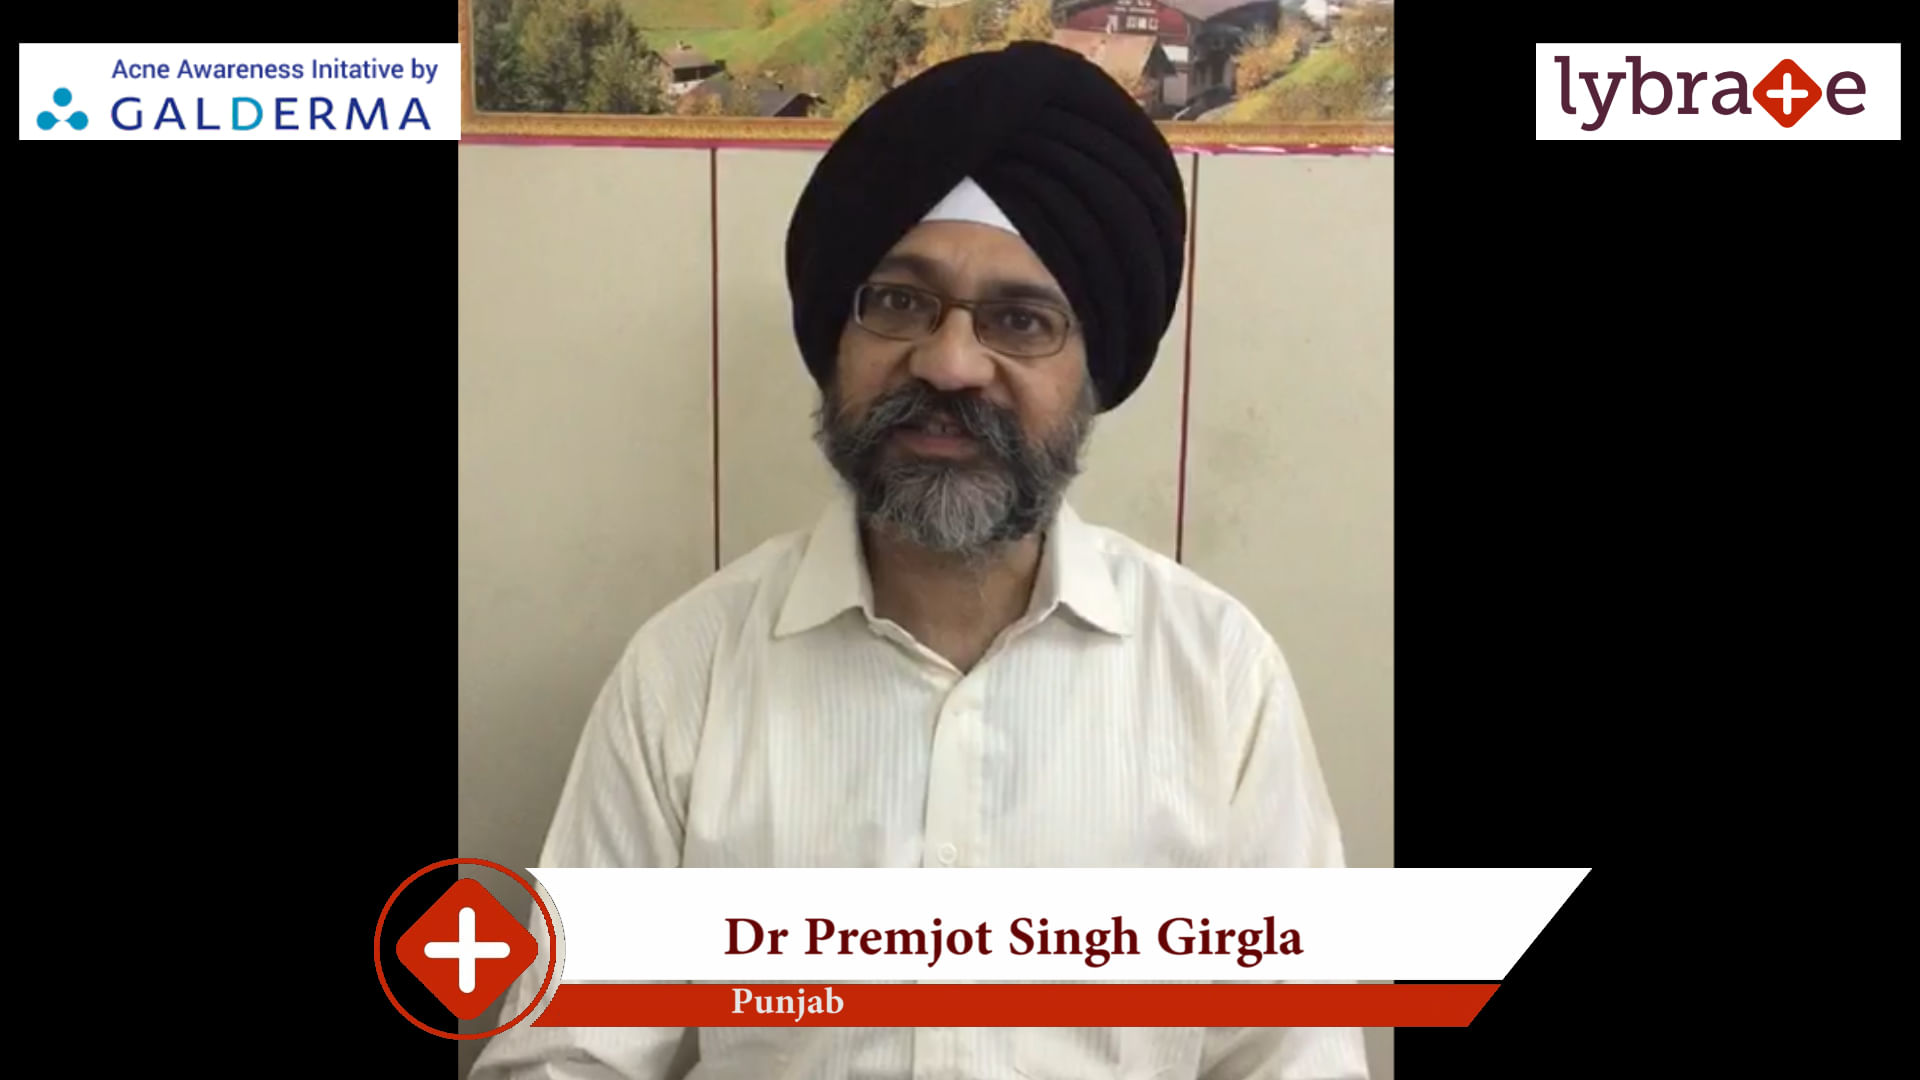 Lybrate | Dr. Premjot Singh Girgla speaks on IMPORTANCE OF TREATING ACNE EARLY